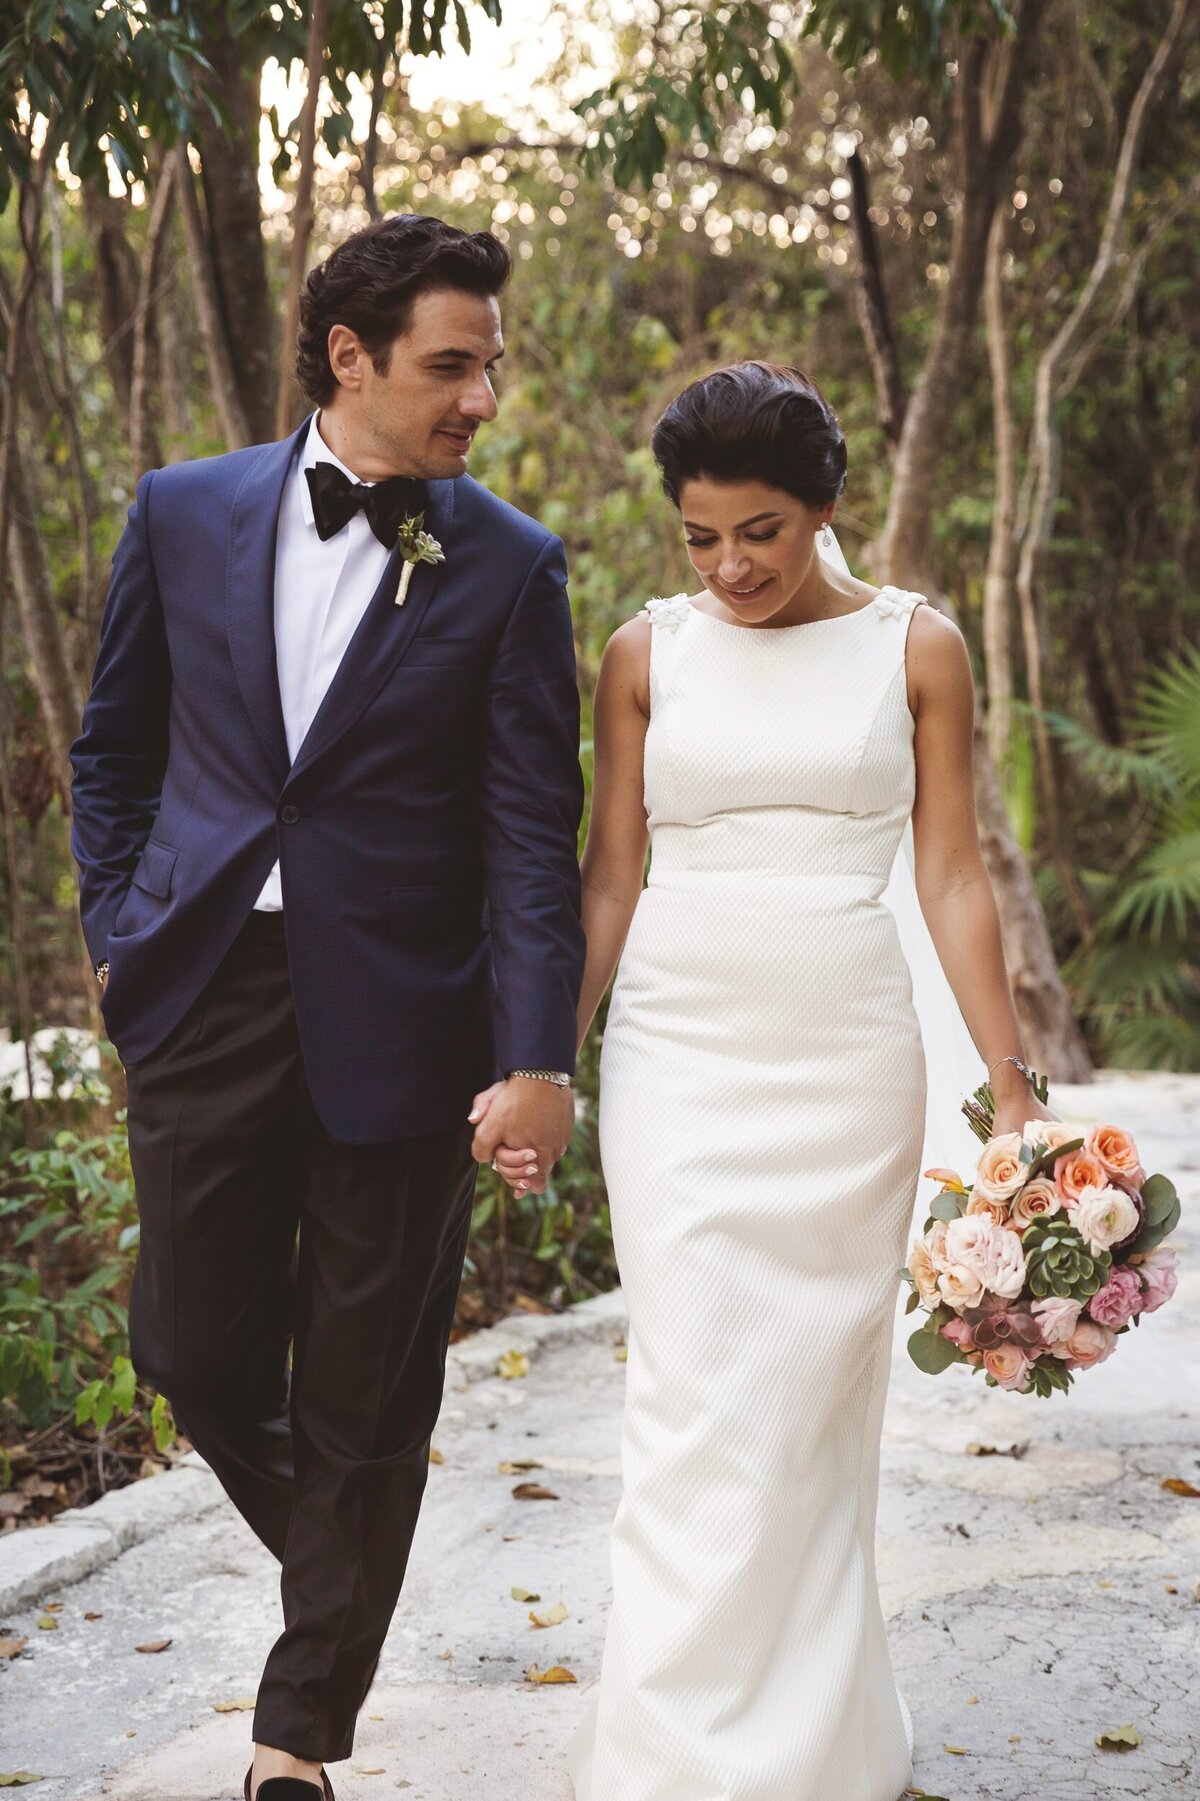 Bride and groom walk down path together at wedding in Riviera Maya